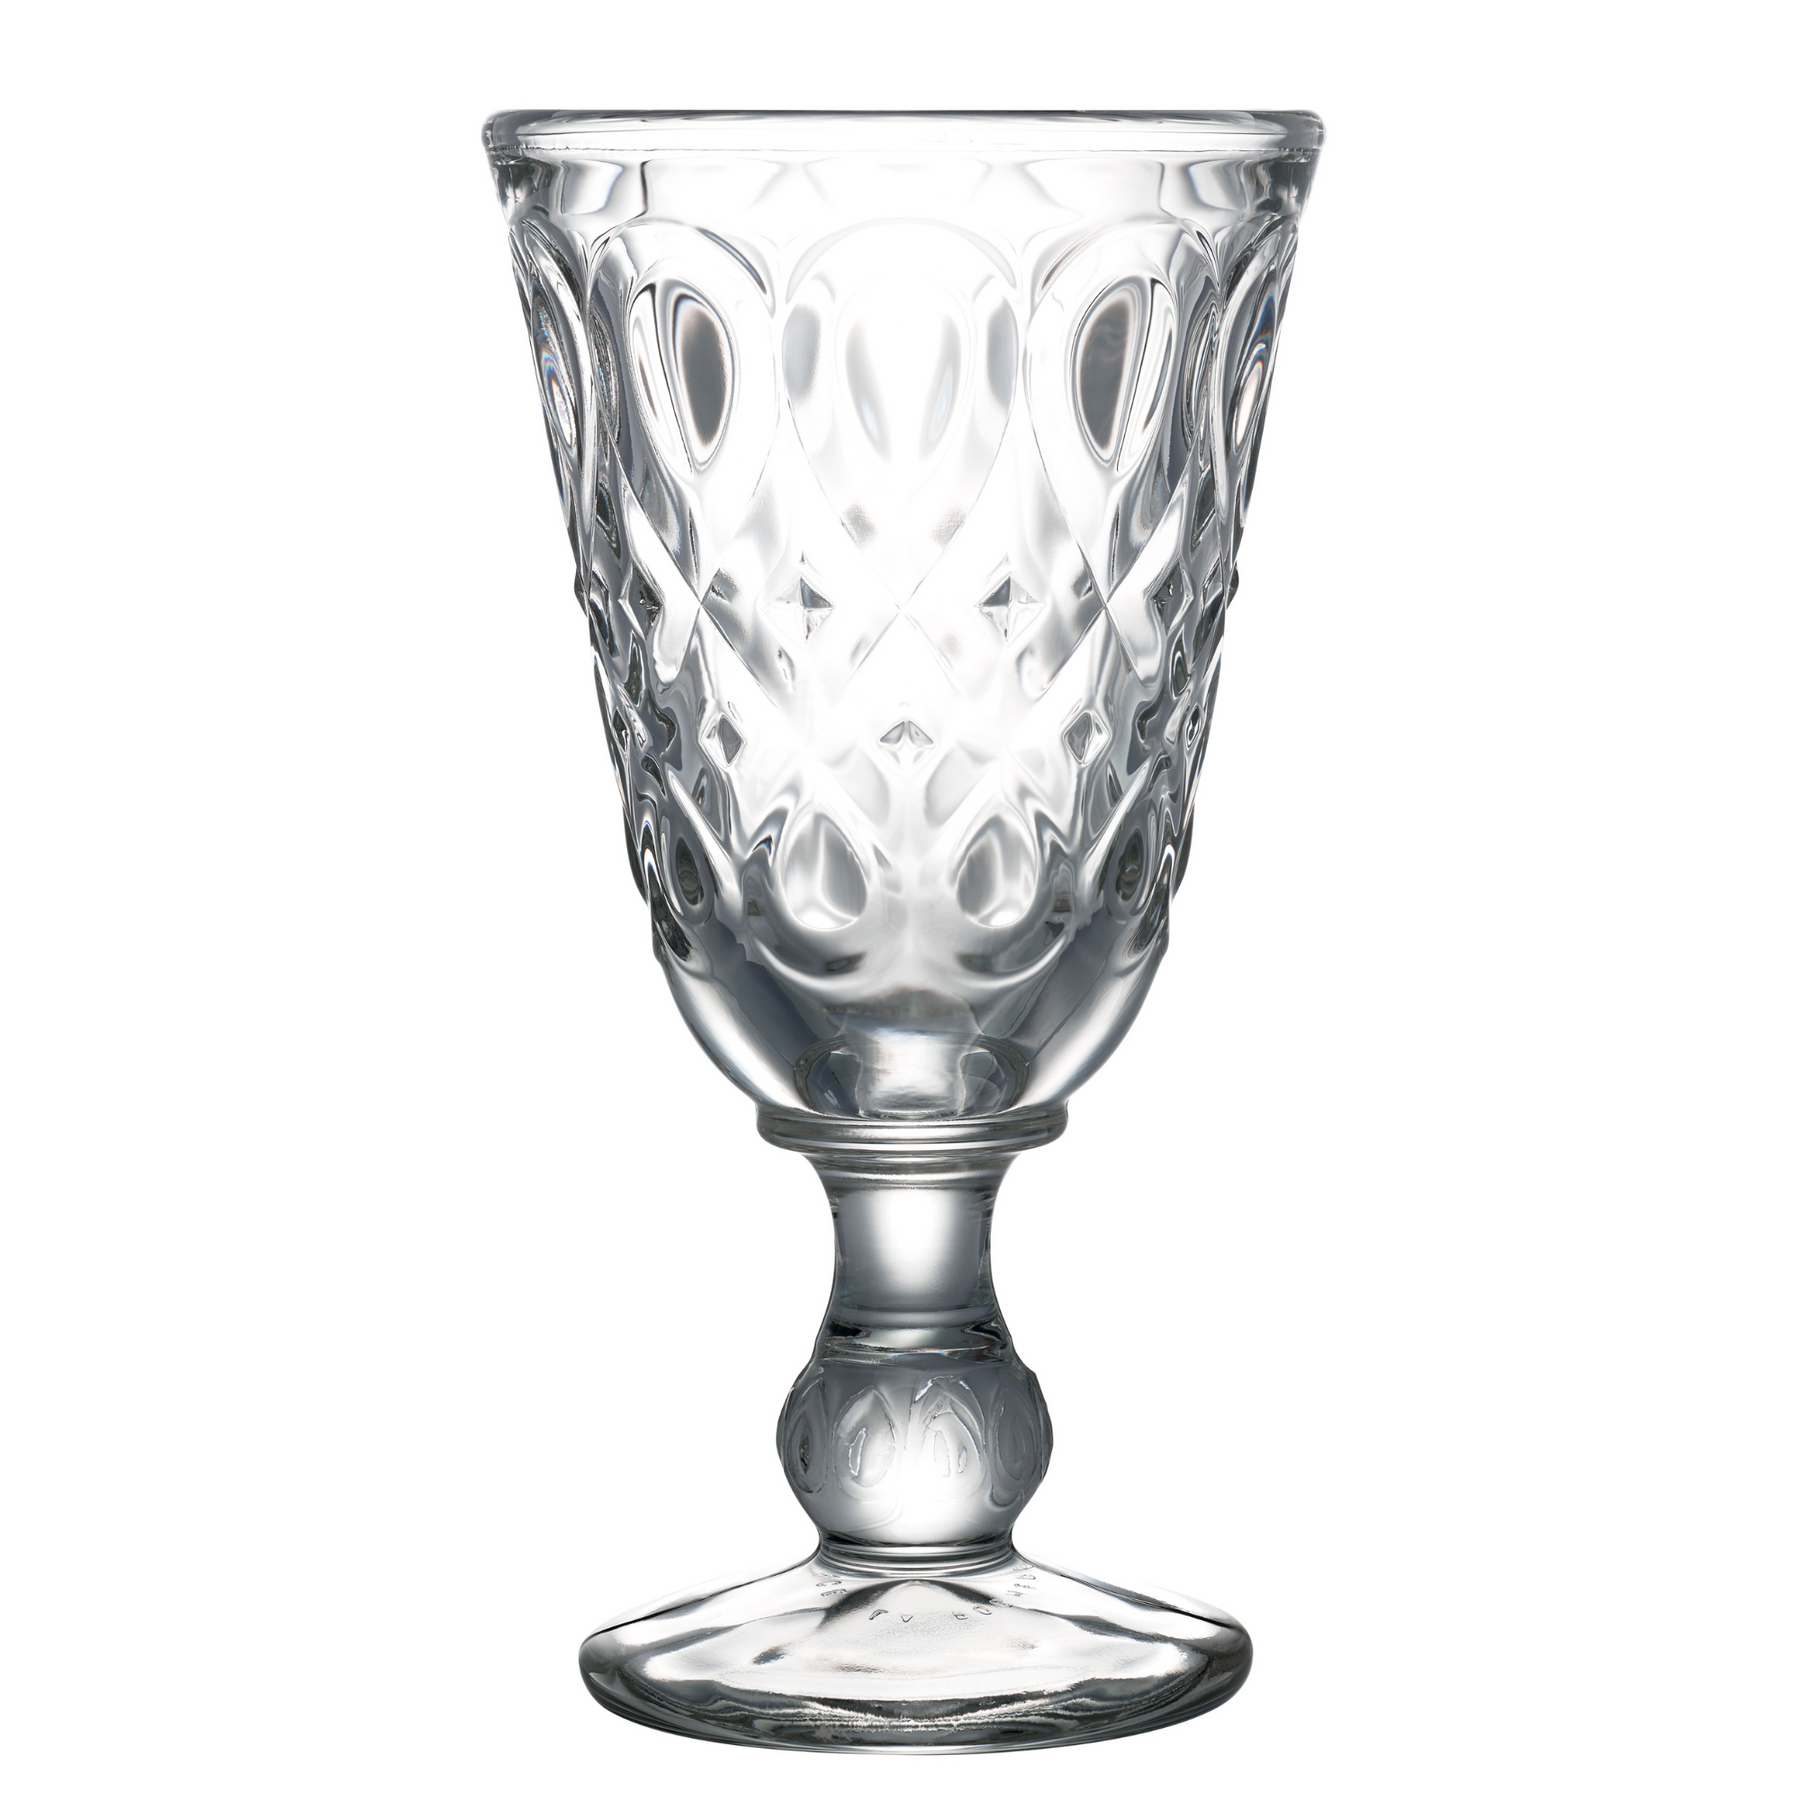 La Rochere Artois 13 oz. Ice Tea Glass, Set of 6 - Clear